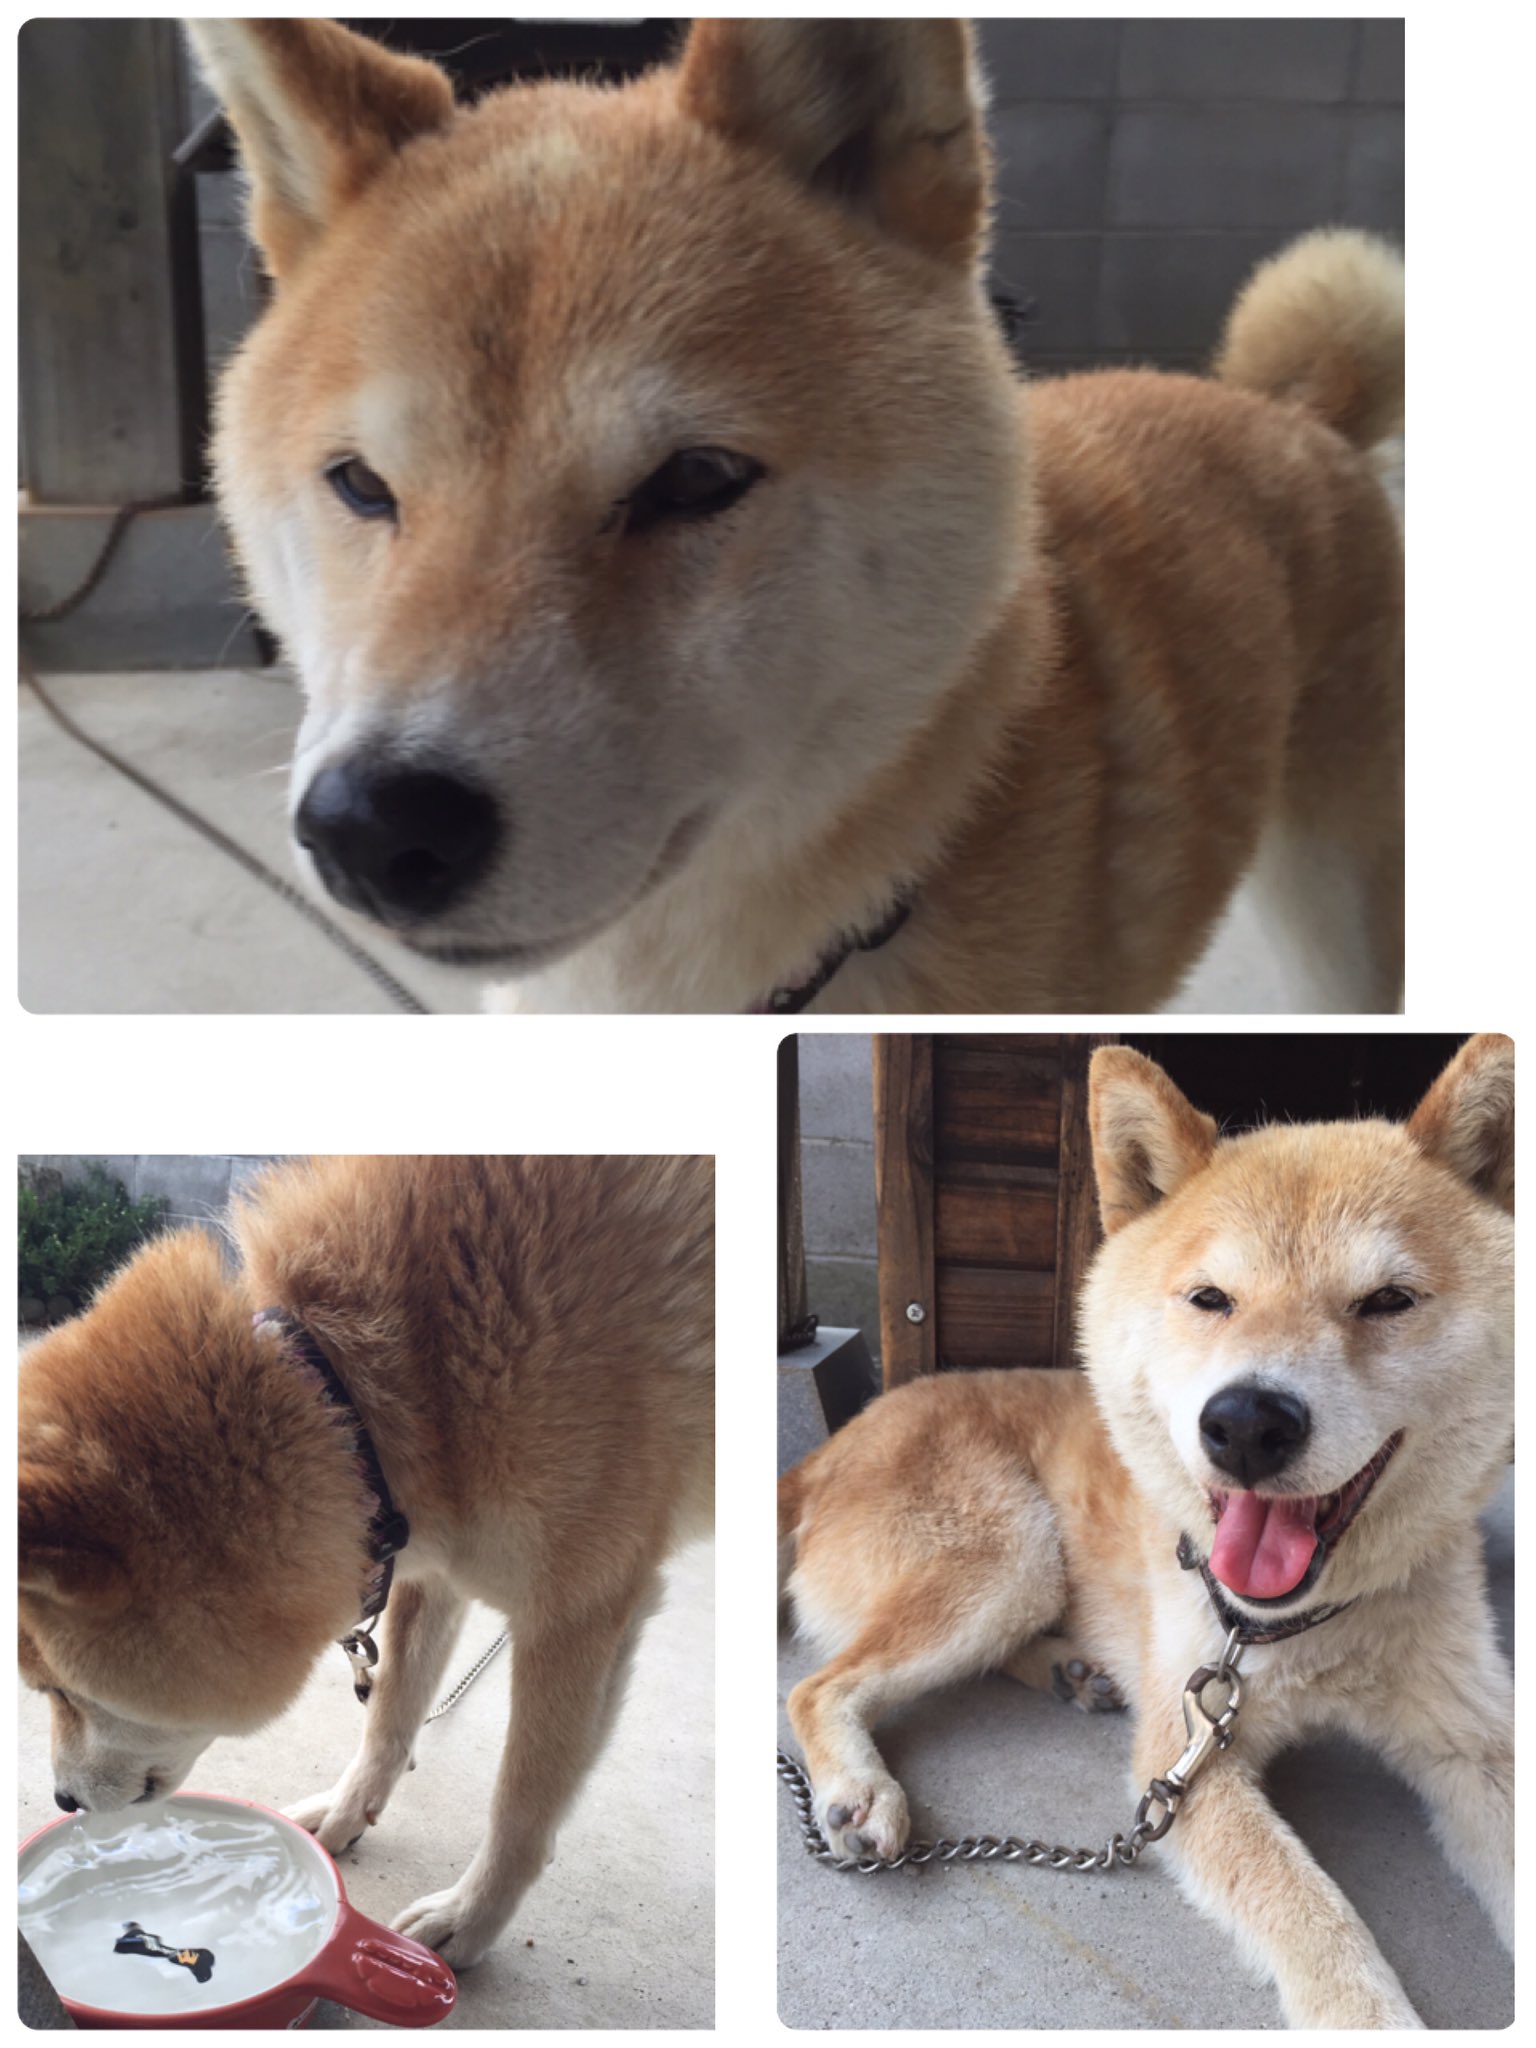 Shomama 探しています 香川県高松市で居なくなりました 12歳のメスの柴犬です 少し臆病な子ですが噛み付いたりはしないです ハイビスカス柄の首輪をつけています どんな情報でも構いませんので ご存知の方よろしくお願い致します Maigo Dog